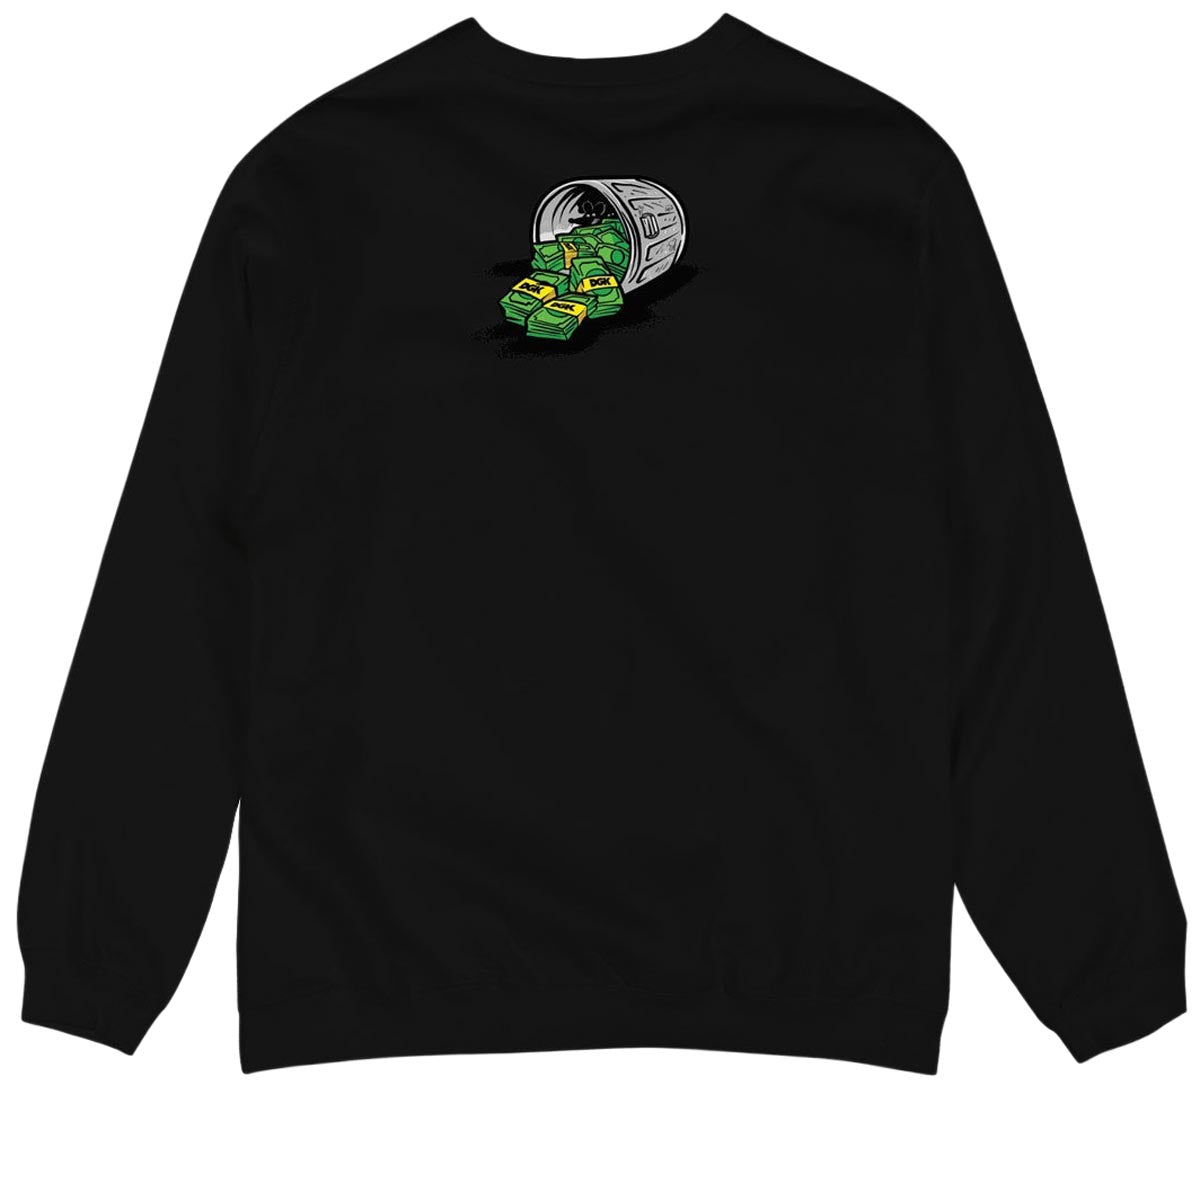 DGK Menace Crewneck Sweatshirt - Black image 2